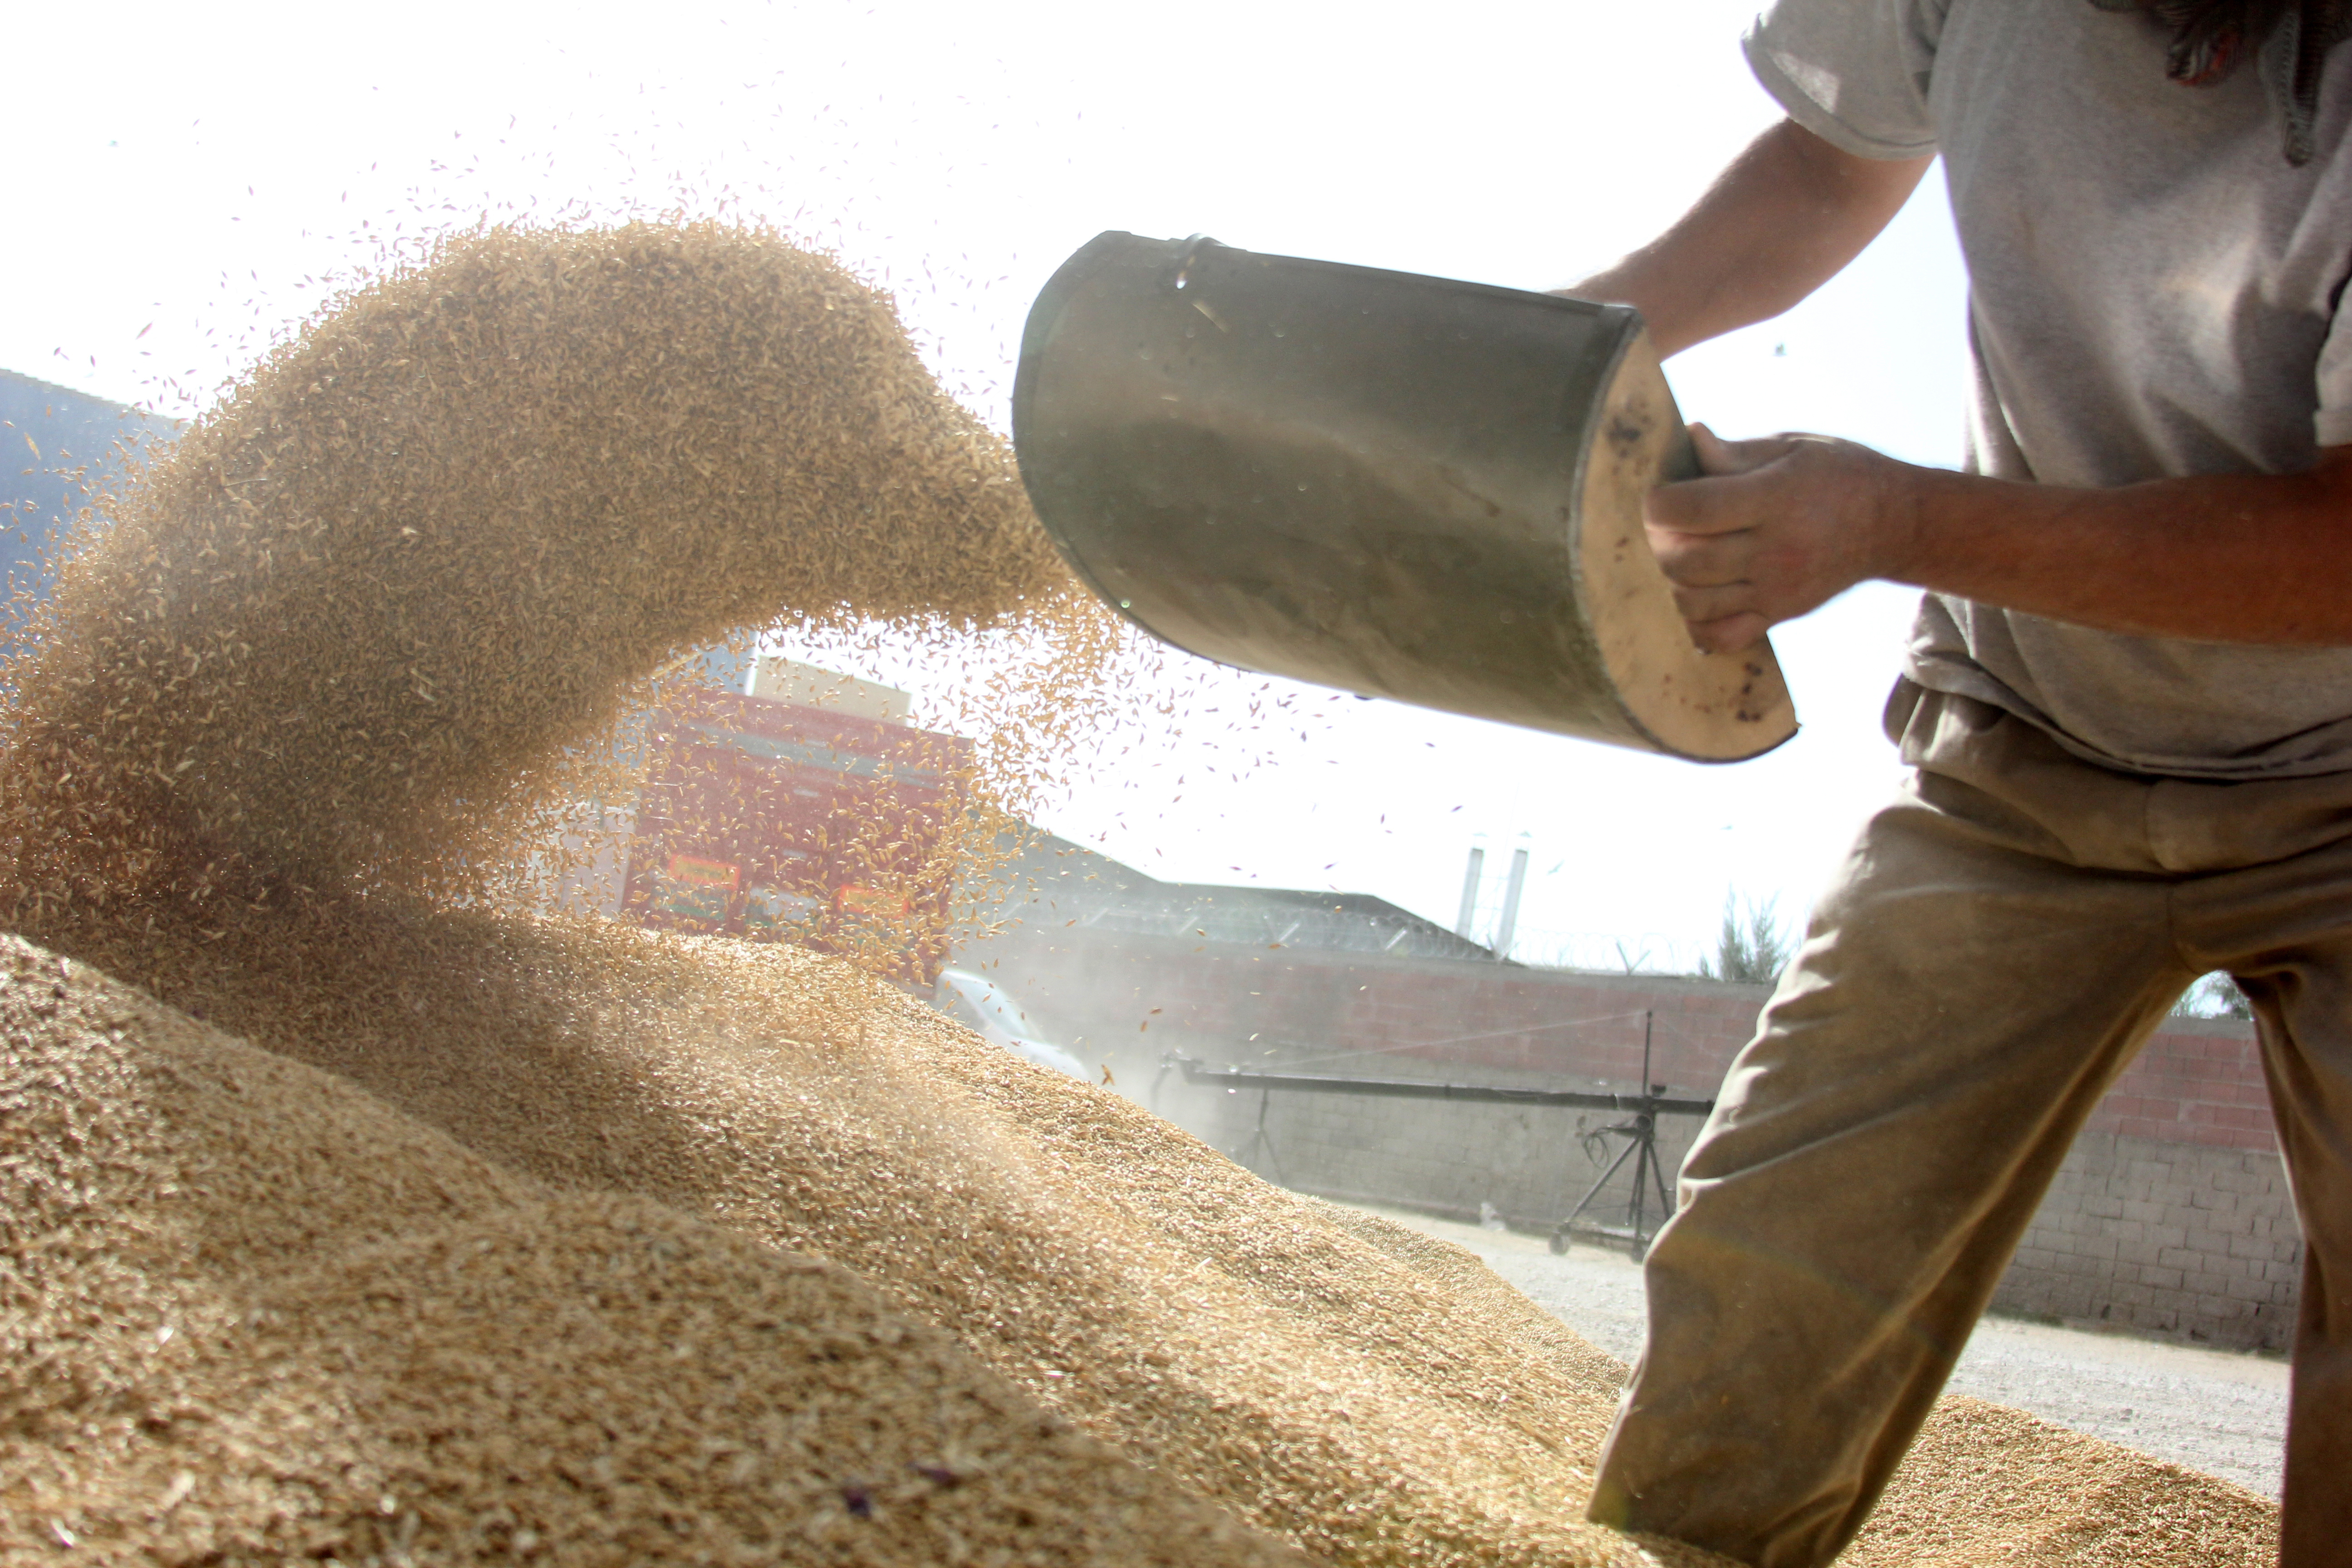 farmer shovelling a pile of feed grains